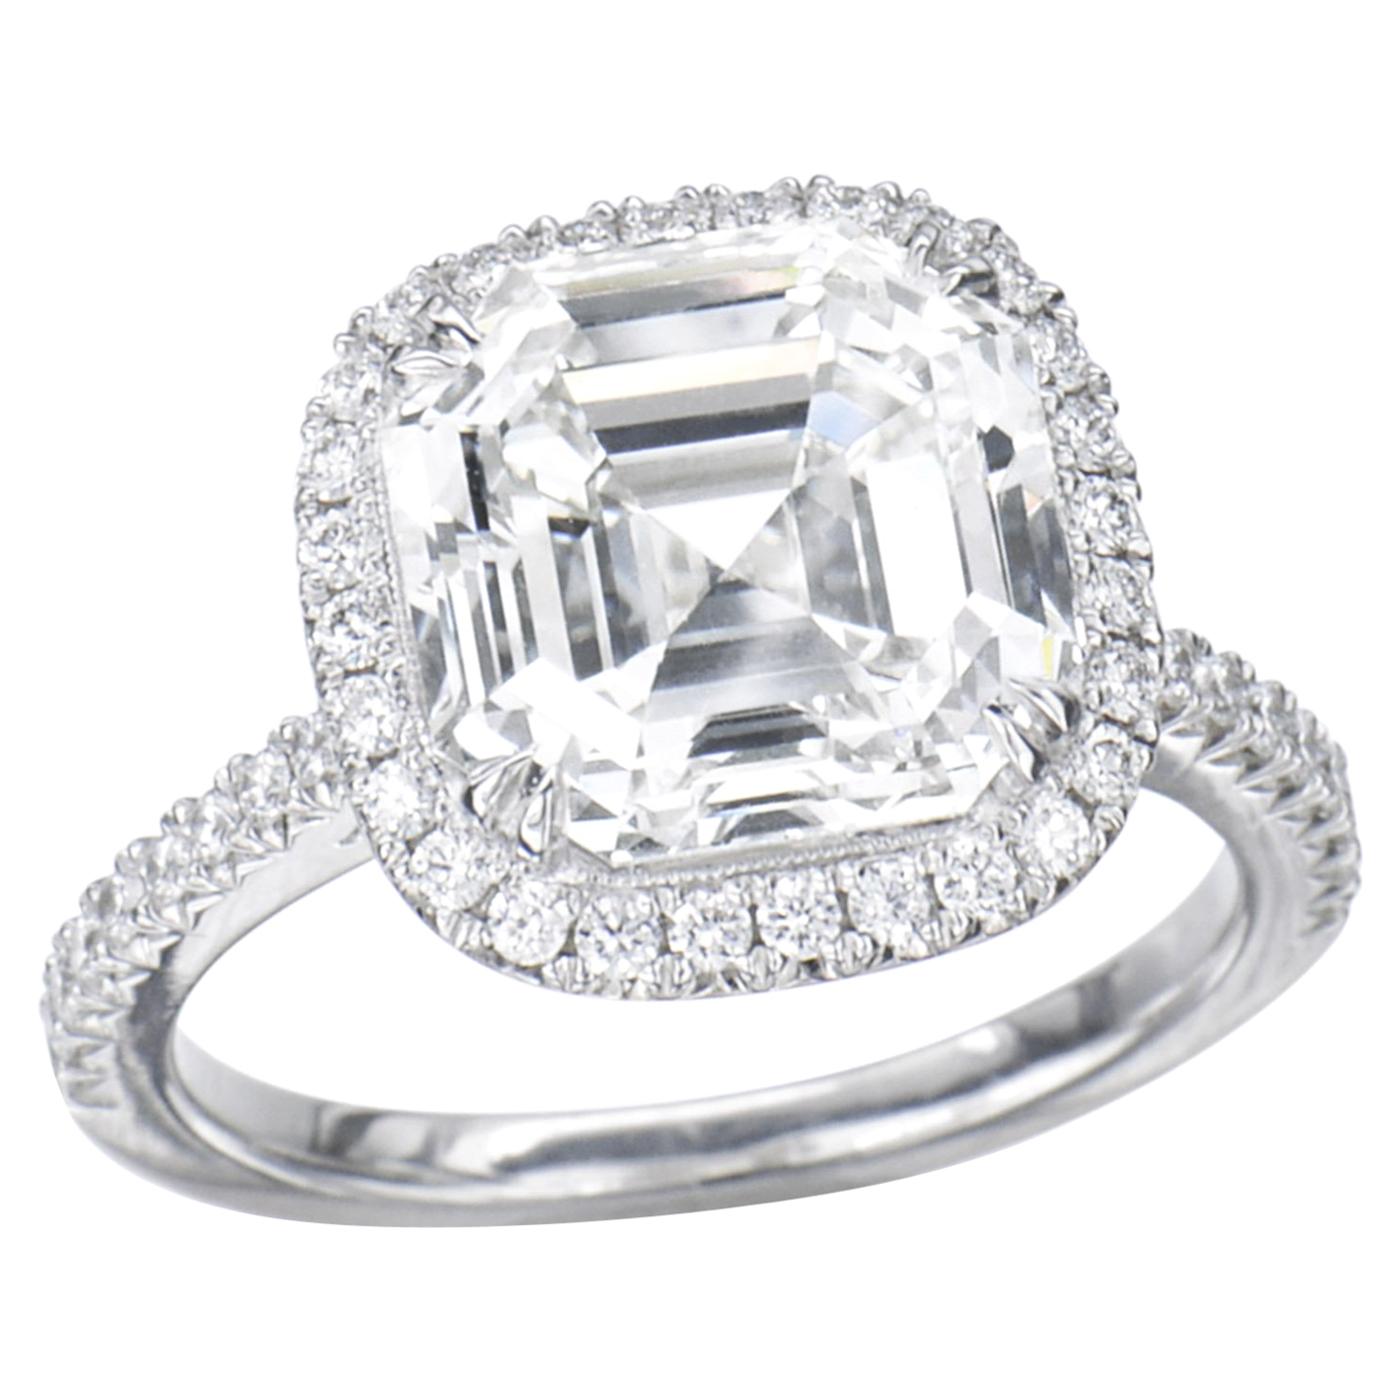 2.00 Carat Asscher Cut GIA Diamond Engagement Ring 950 Platinum Setting For Sale